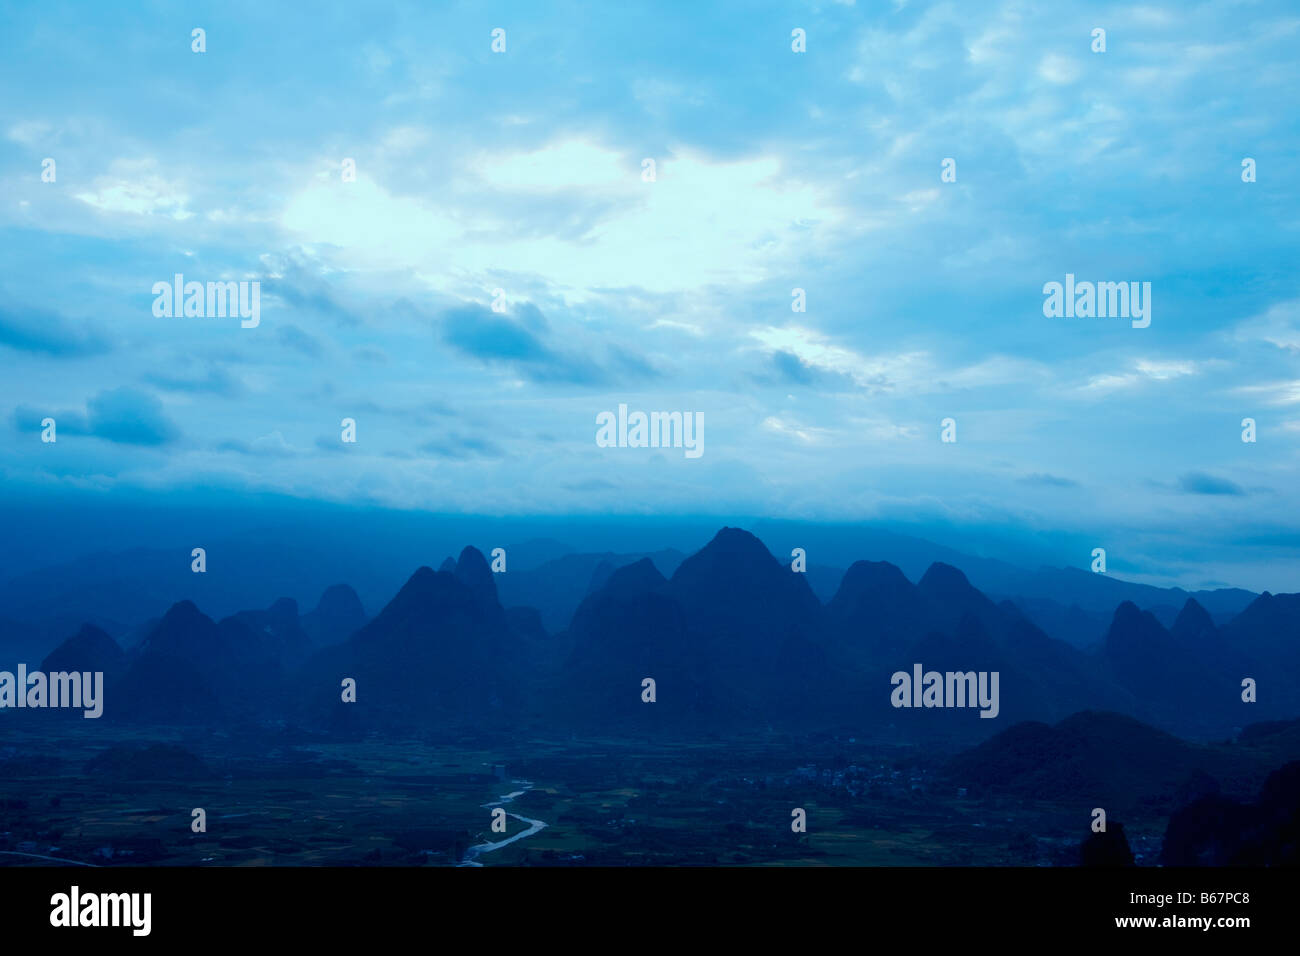 Silhouette von Hügelketten in der Abenddämmerung, Guilin Hügeln, Xingping, Yangshuo, Provinz Guangxi, China Stockfoto